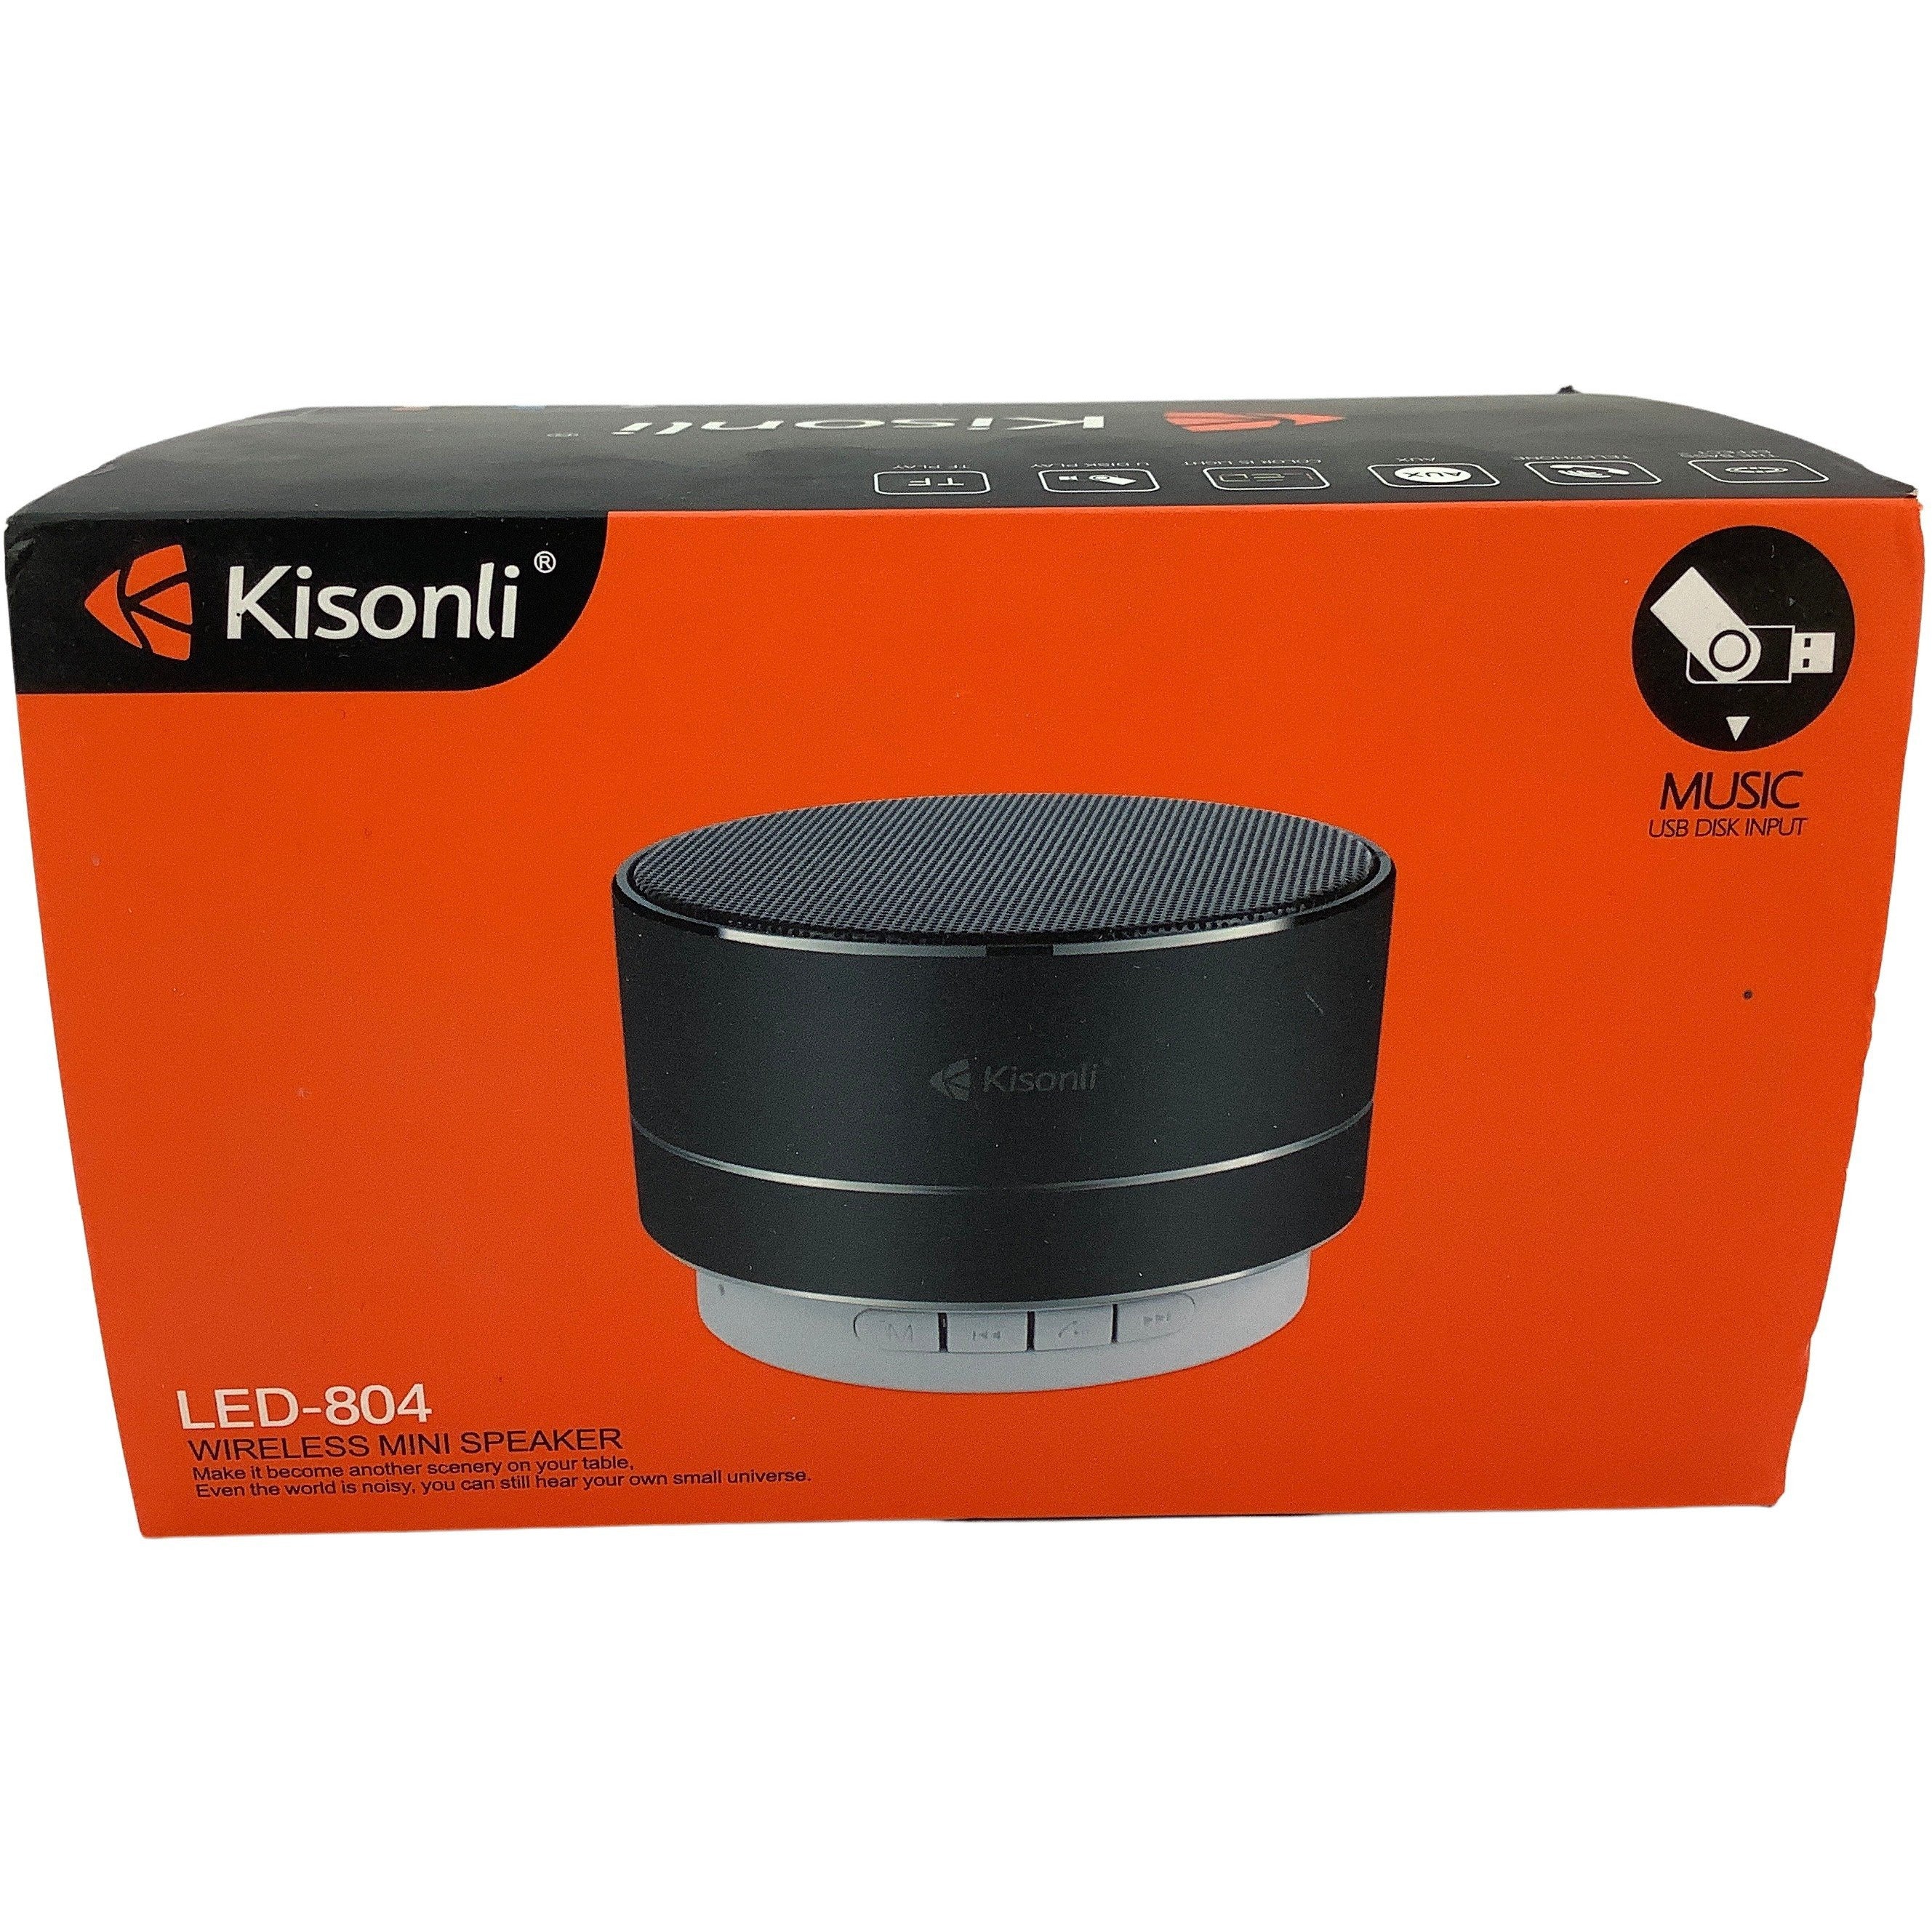 Kisonli Bluetooth Mini Speaker: Wireless Speaker